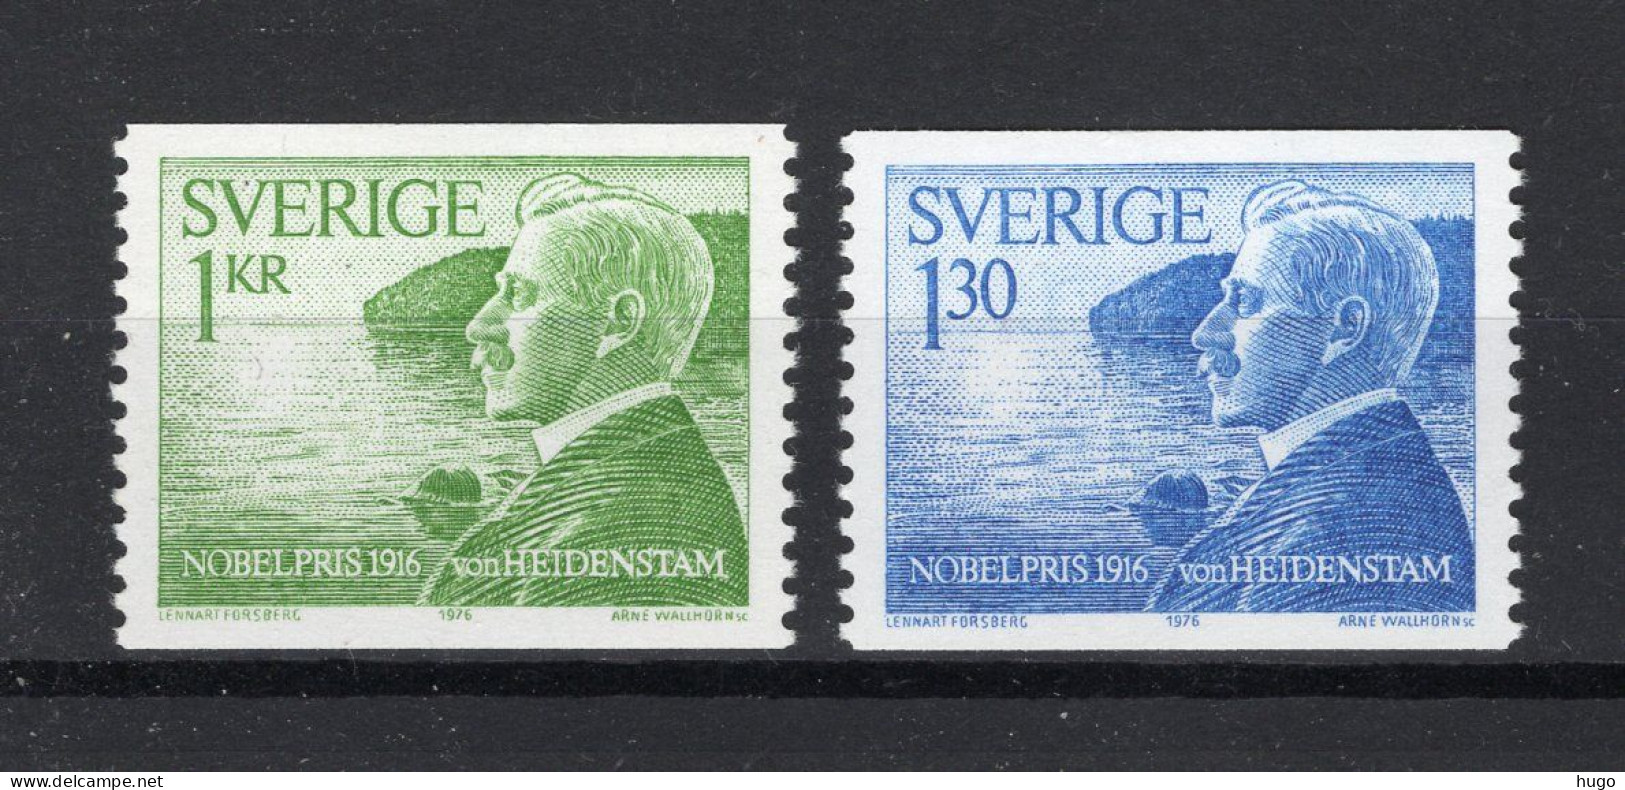 ZWEDEN Yvert 950/951 MNH 1976 - Unused Stamps